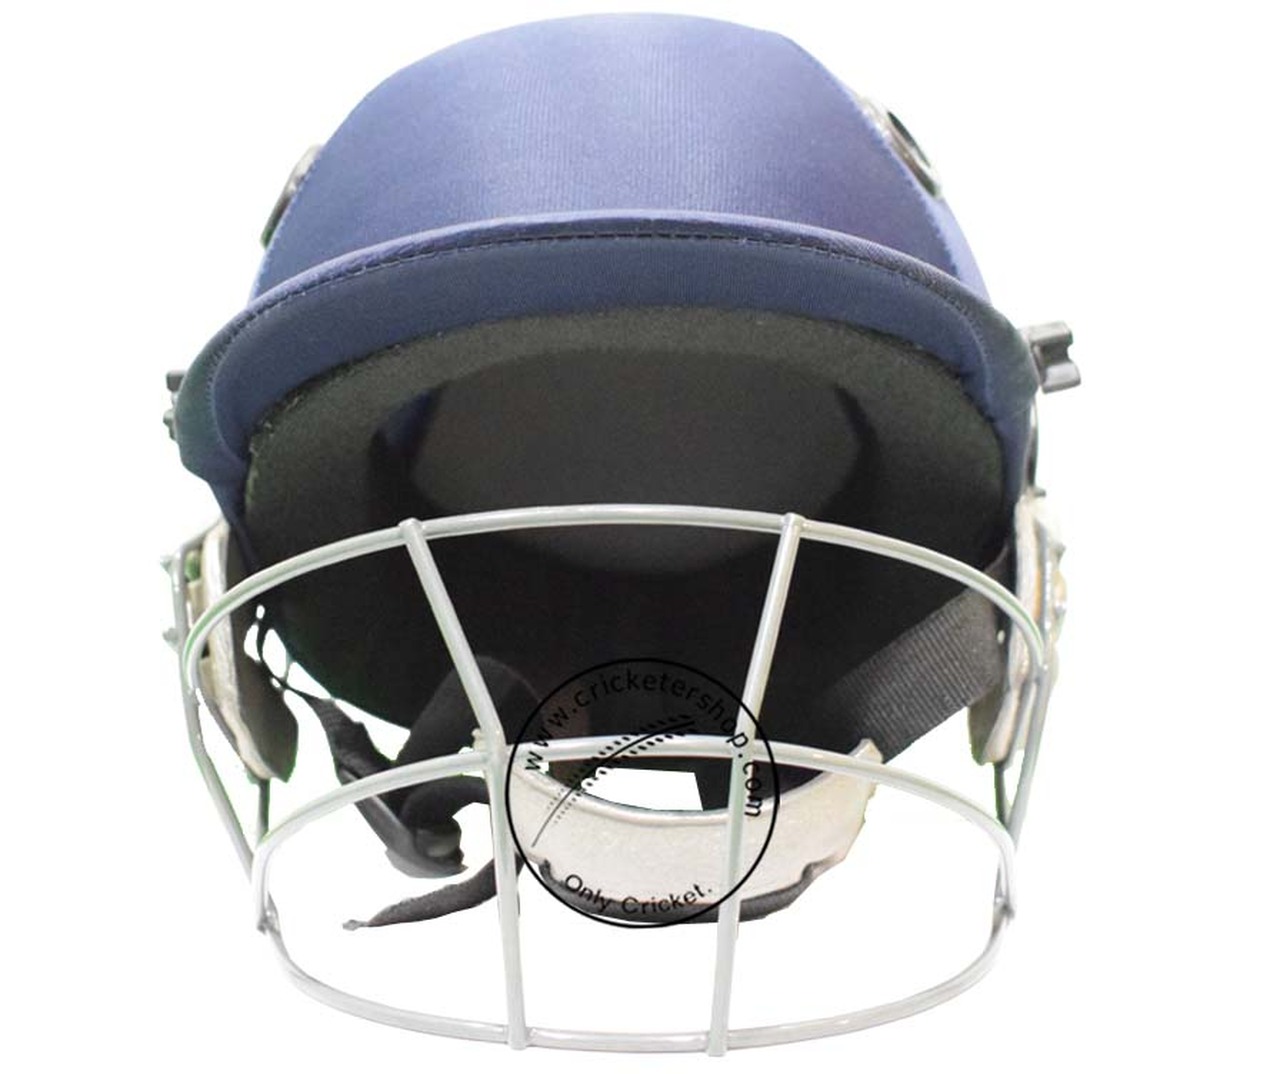 MRF Helmet Prodigy SNR Cricket Helmet. Buy Online at India's Specialist Cricket Shop. Price, Photo & Features. MRF Cricket